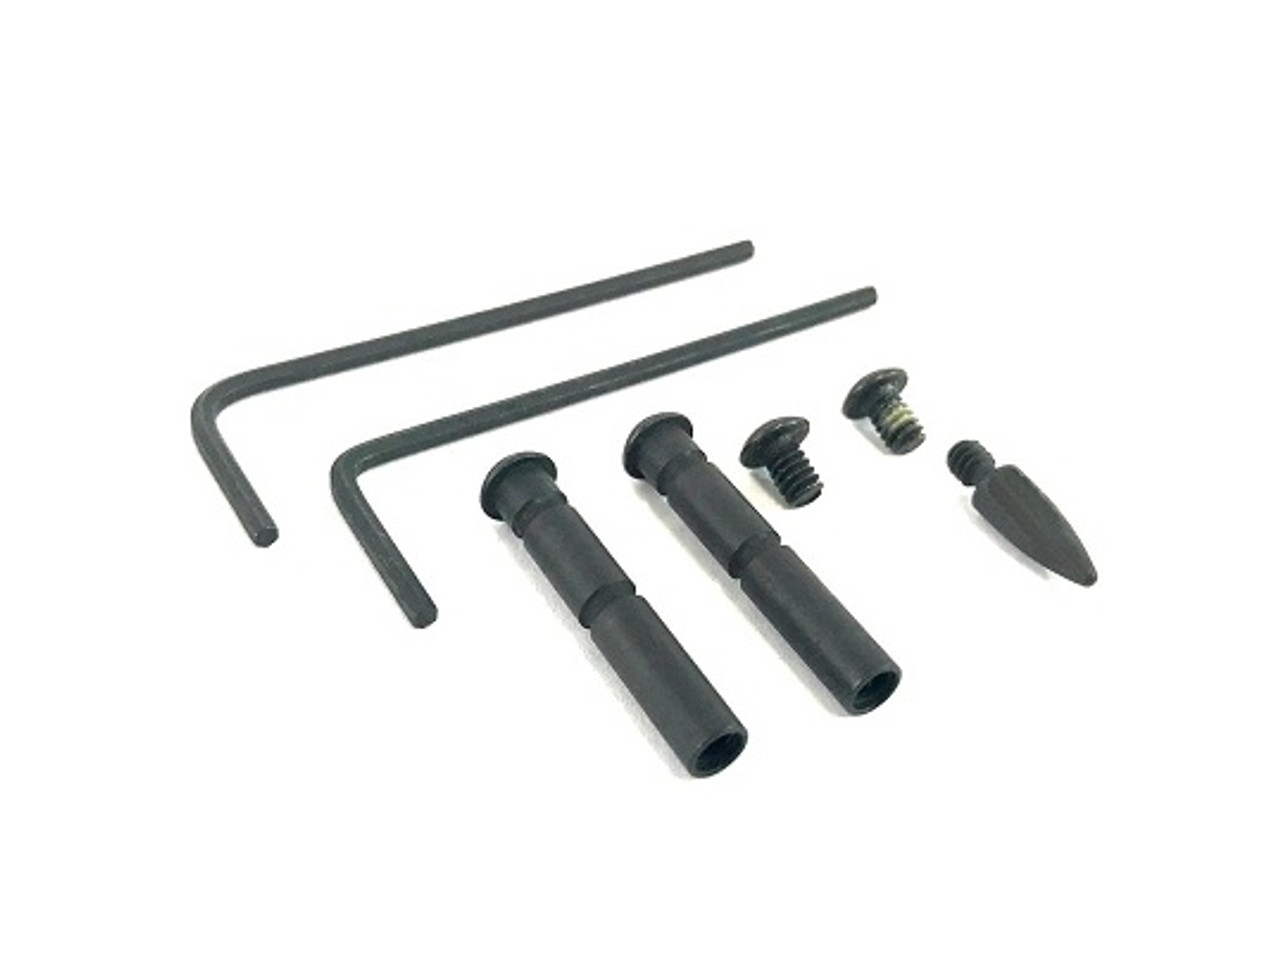 CMC AR-15 Anti-Walk Pin Kit-Set of (2) .154 Hammer & Trigger Pins